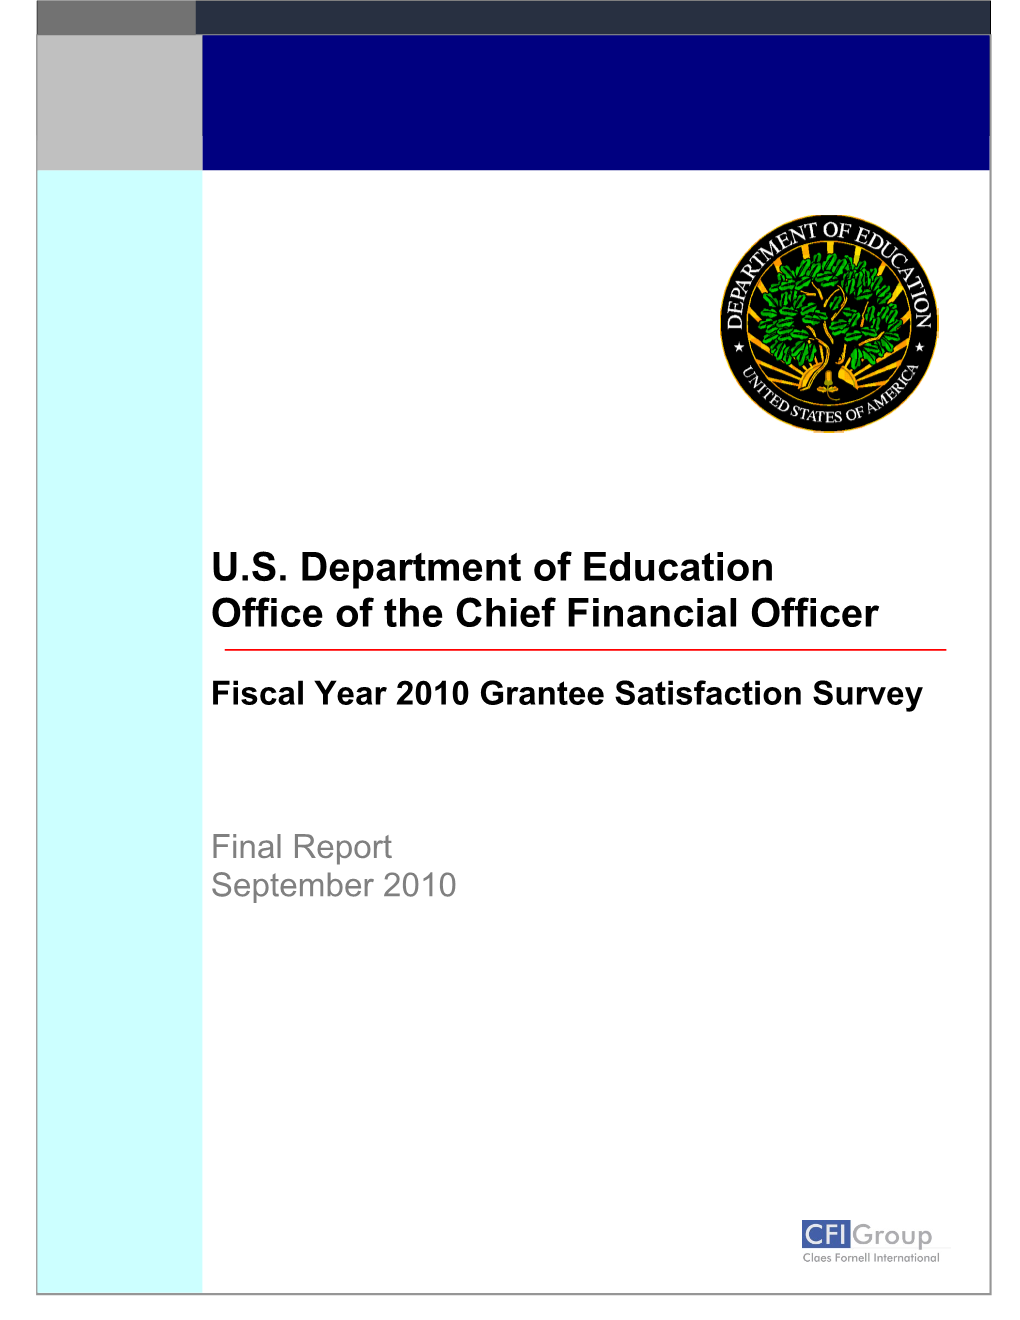 Fiscal Year 2010 Grantee Satisfaction Survey